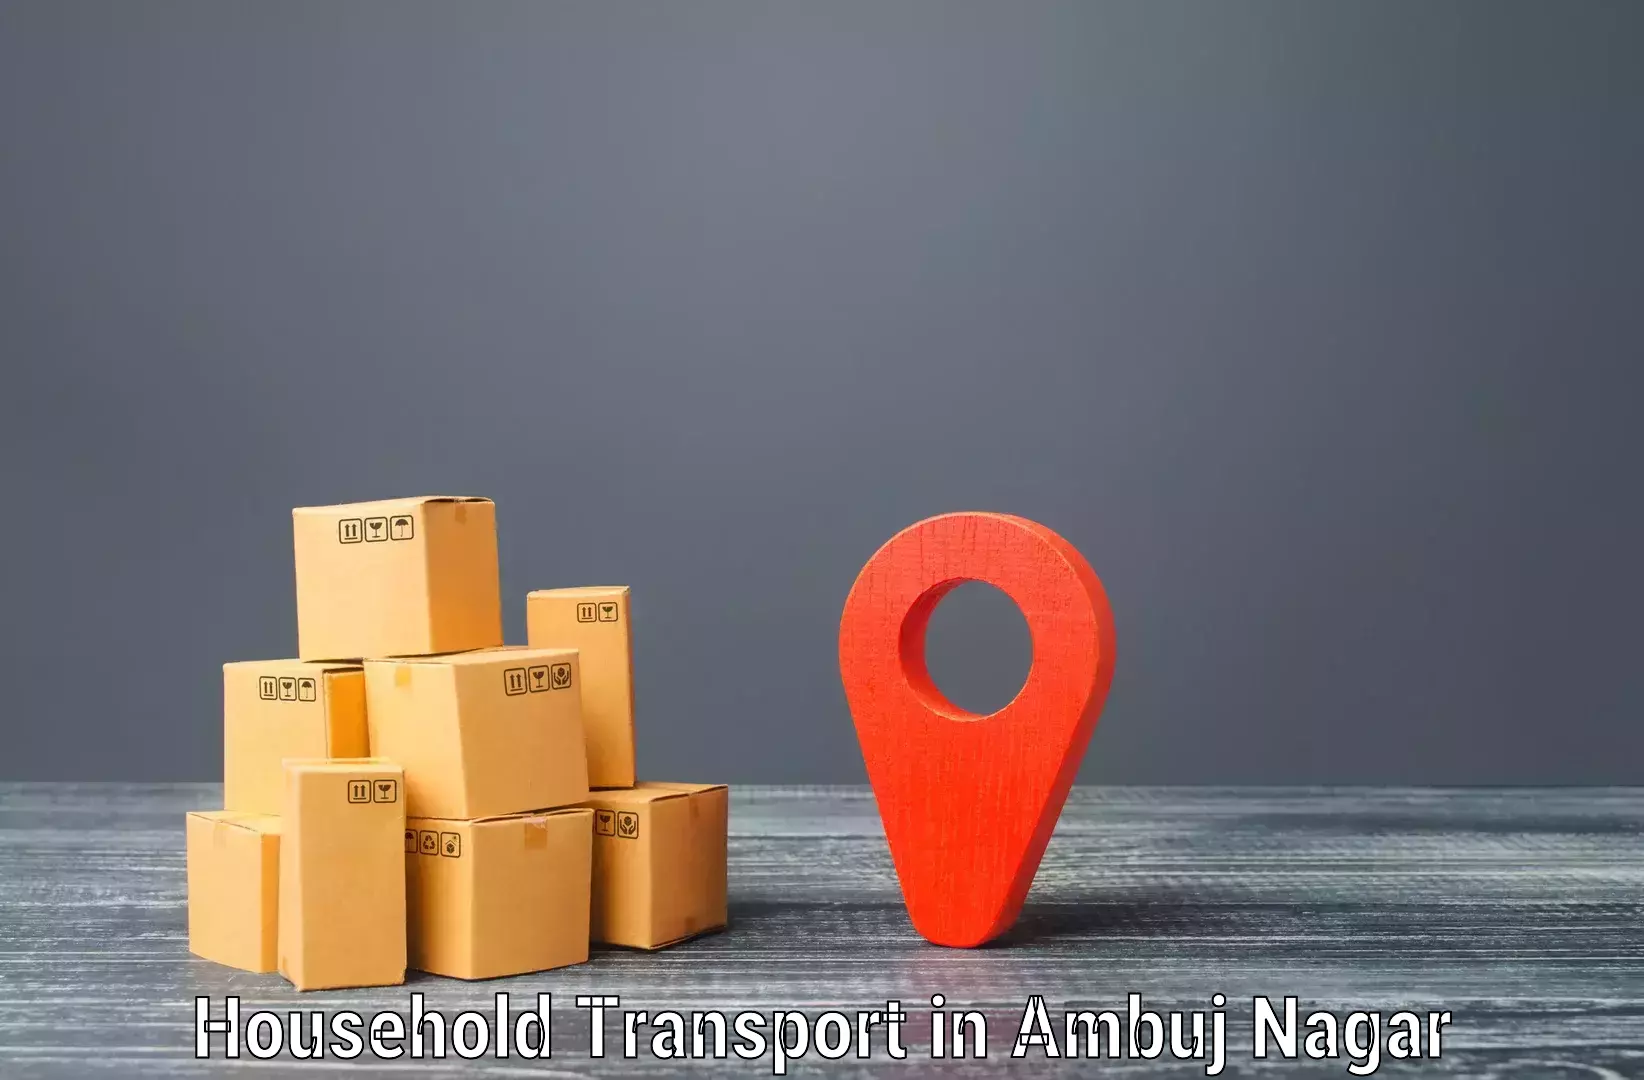 Professional movers in Ambuj Nagar